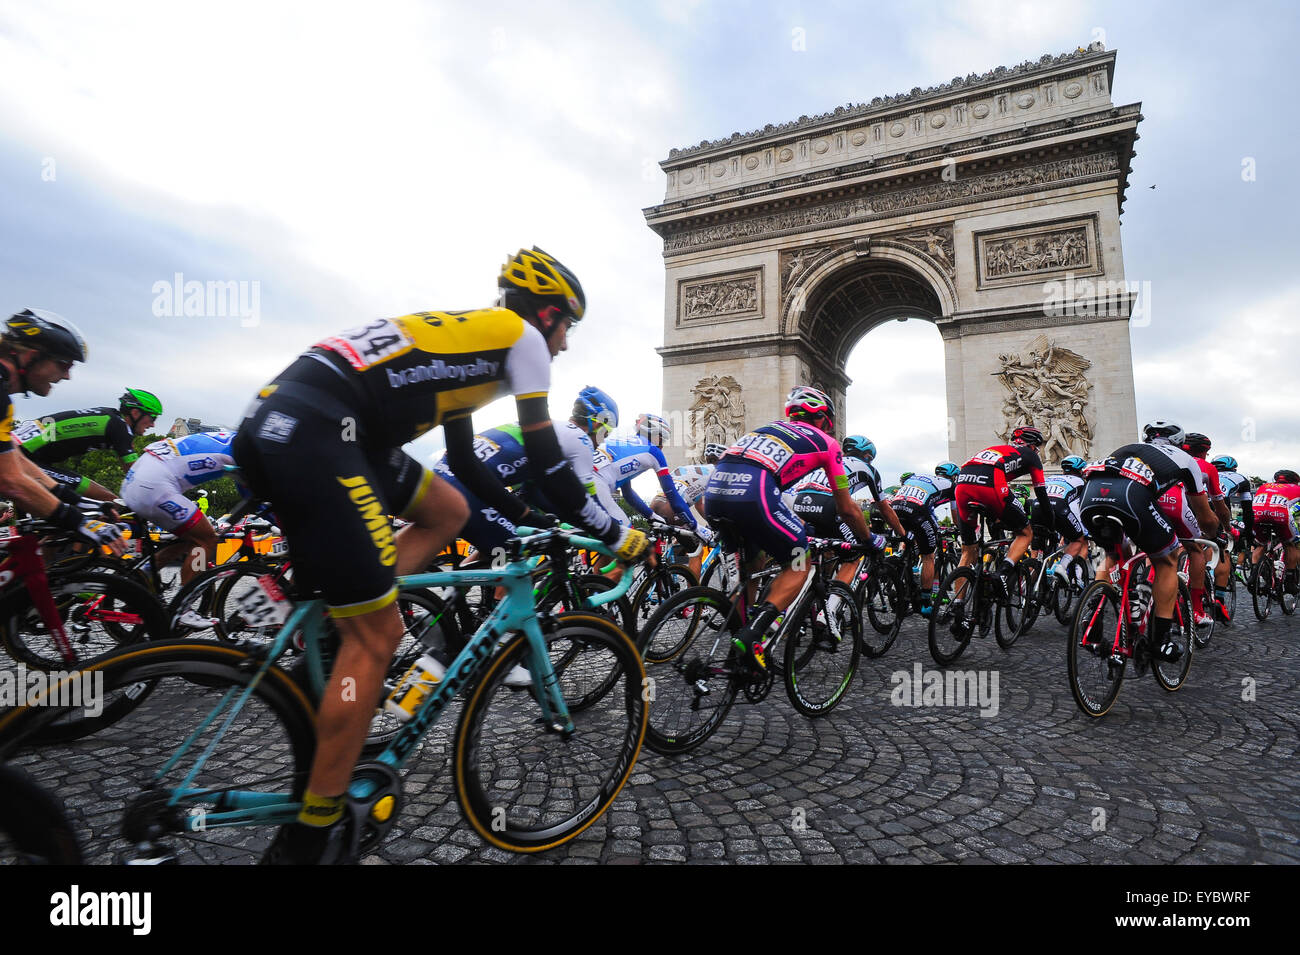 Parigi, Francia. Luglio 26, 2015. Piloti dall'Arc de Triomphe durante la fase finale 21 del Tour de France a Parigi. Foto: Miroslav Dakov/ Alamy Live News Foto Stock